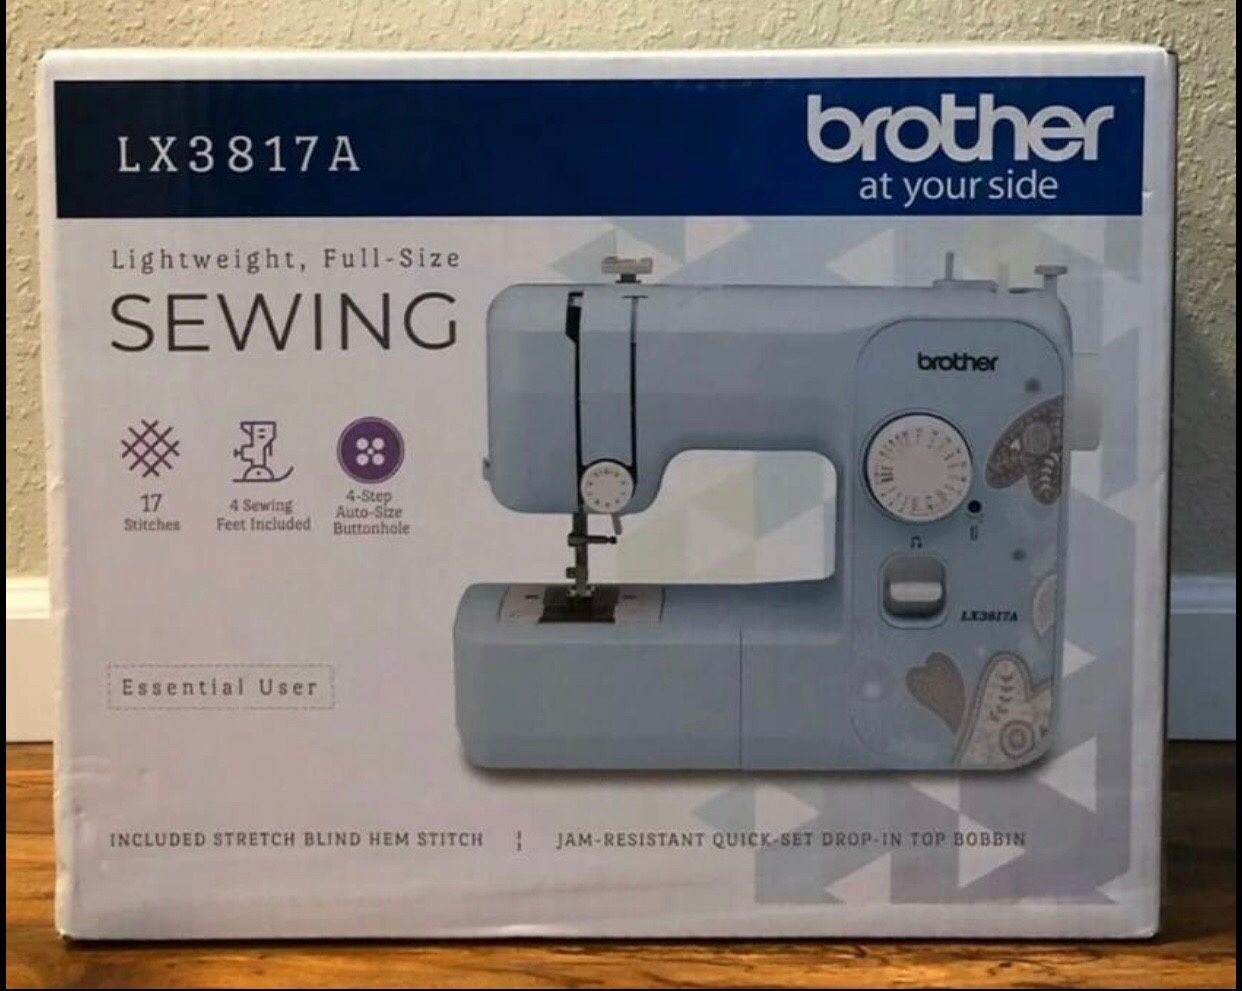 Sewing Machine Brother LX3817A 17-Stitches Full Size Lightweight Sewing Machine Aqua BRAND NEW IN BOX!!!!!